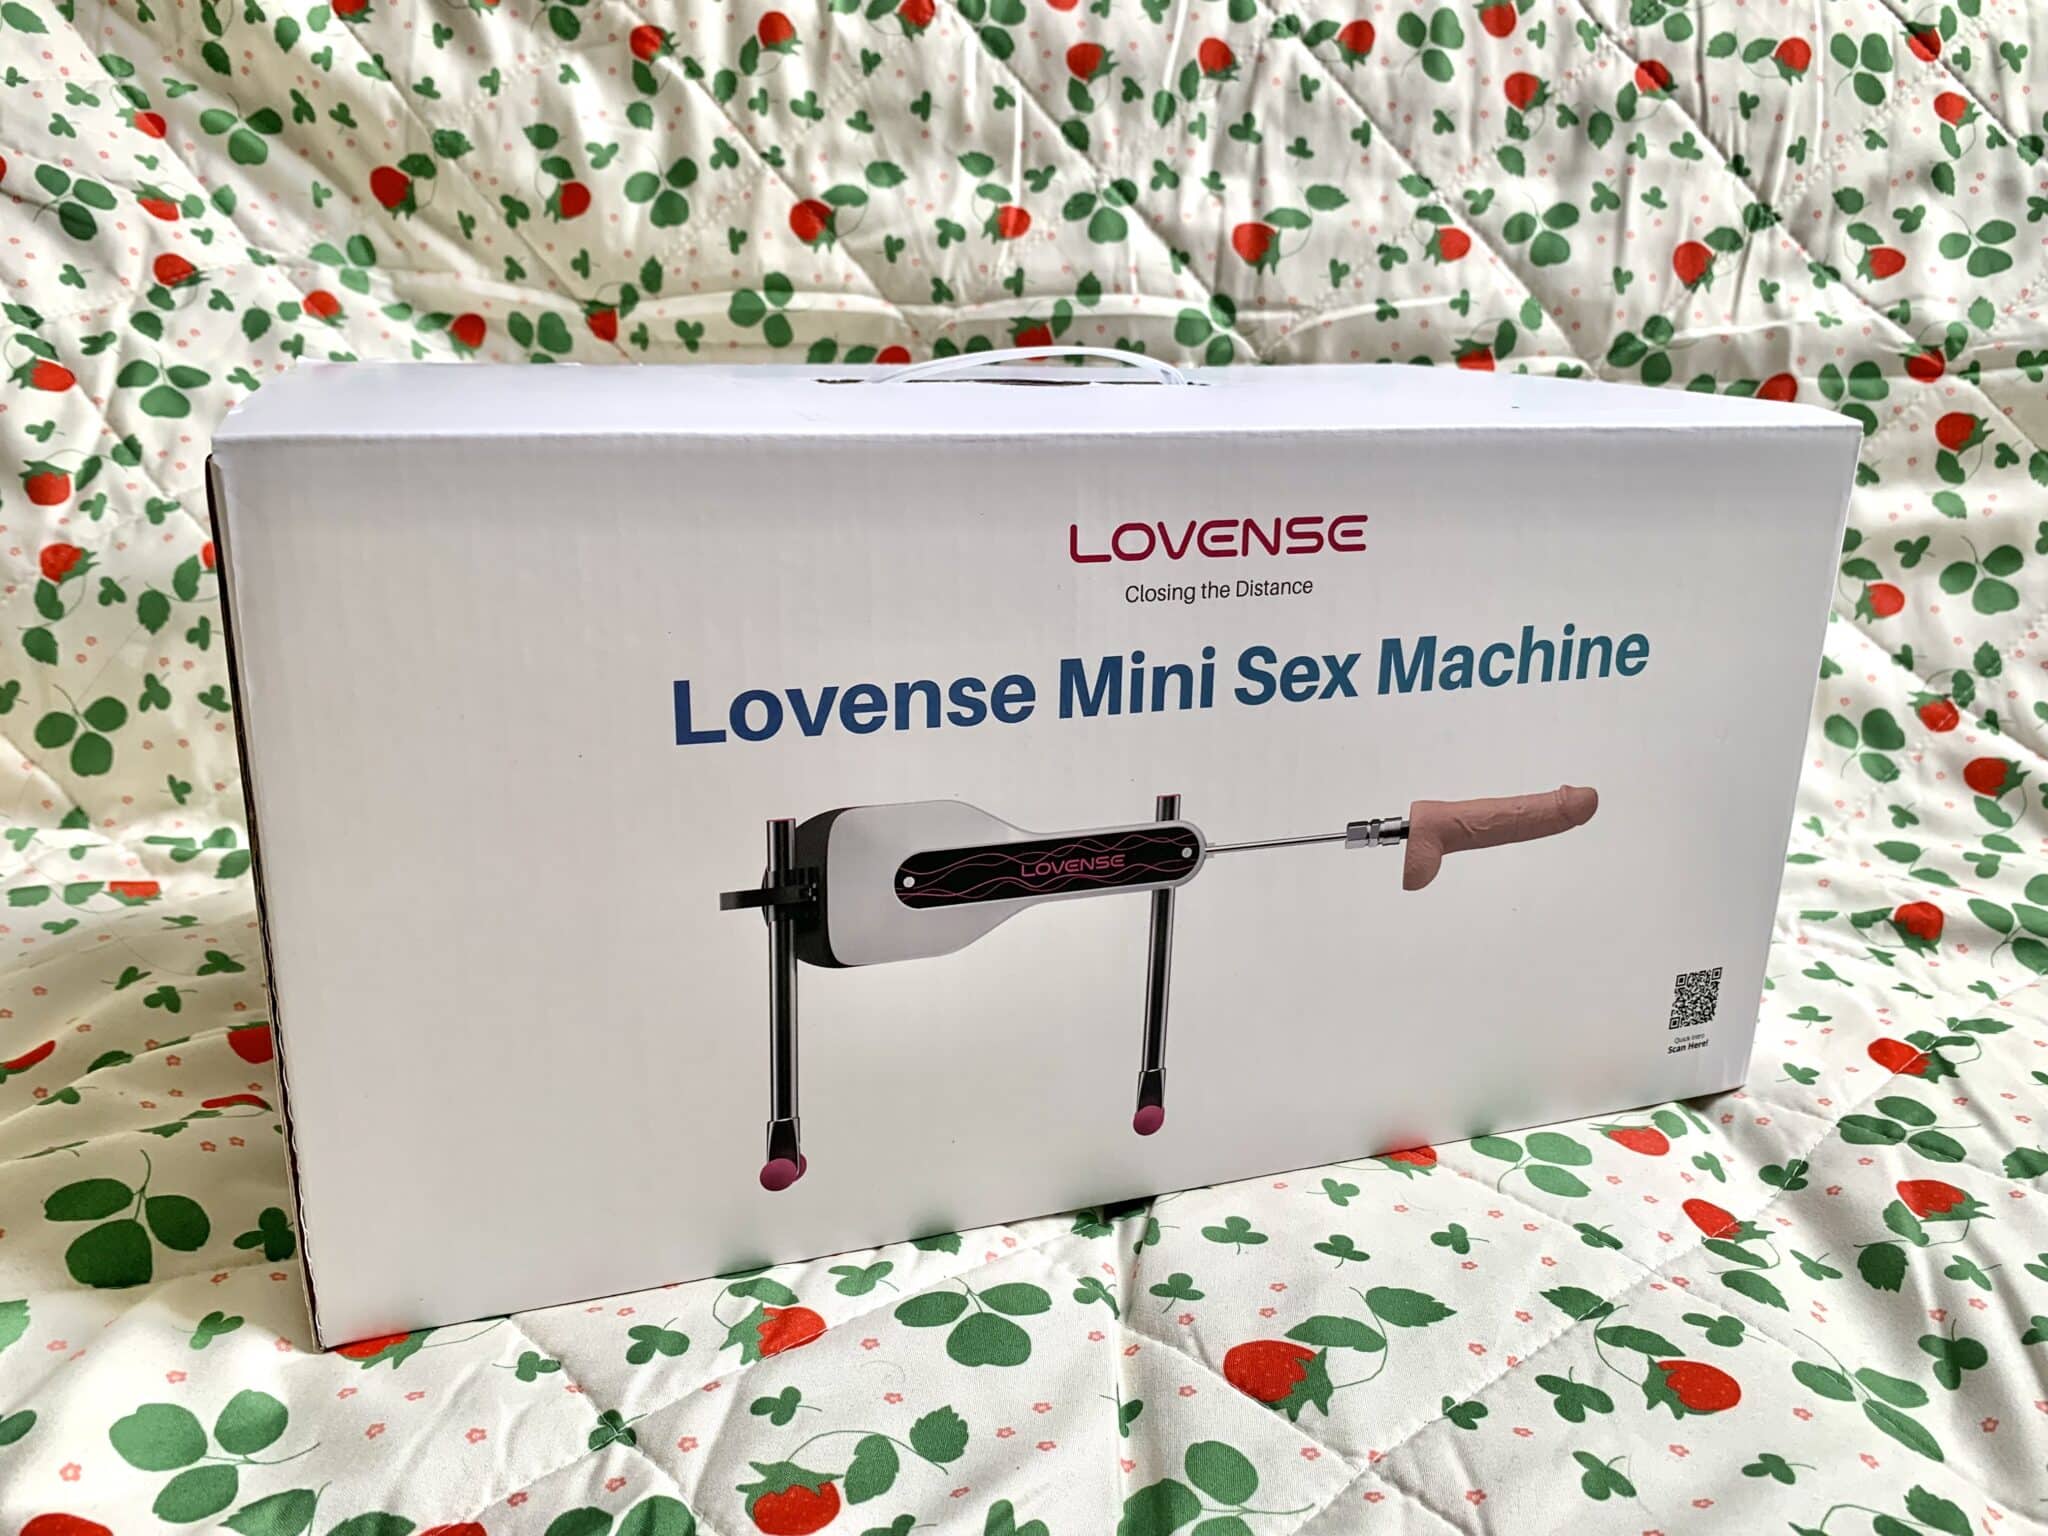 Lovense Mini Sex Machine Packaging